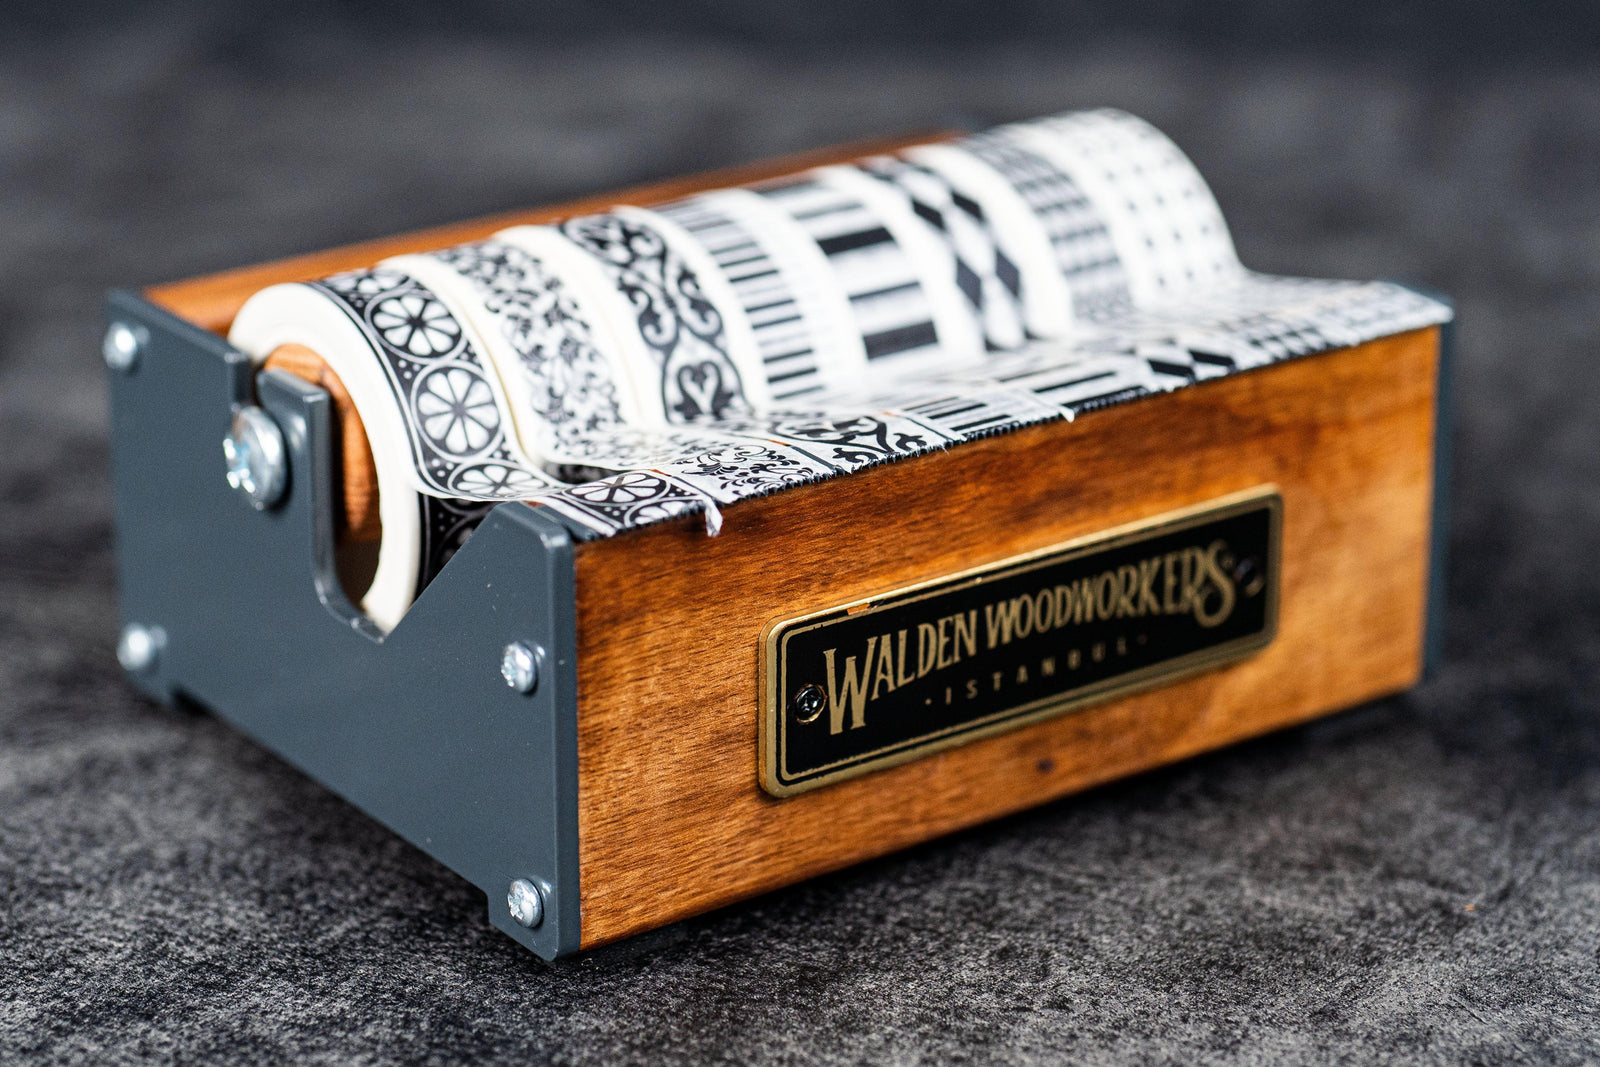 Wooden Multi Washi Tape Dispenser - Mahogany - Small